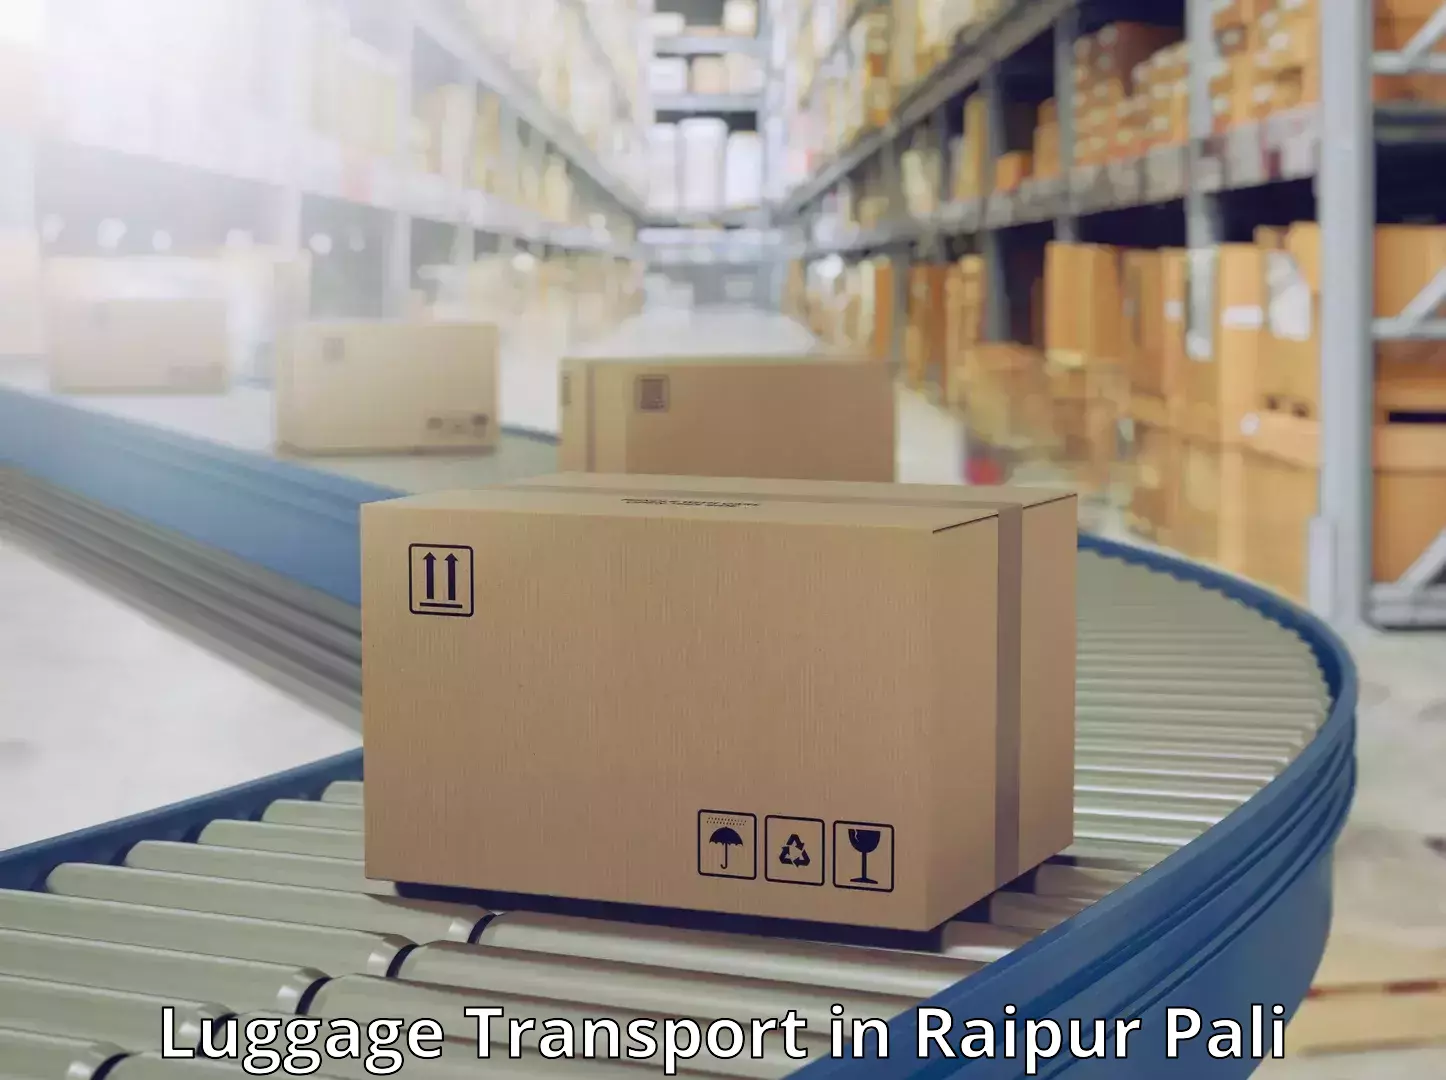 Heavy luggage shipping in Raipur Pali